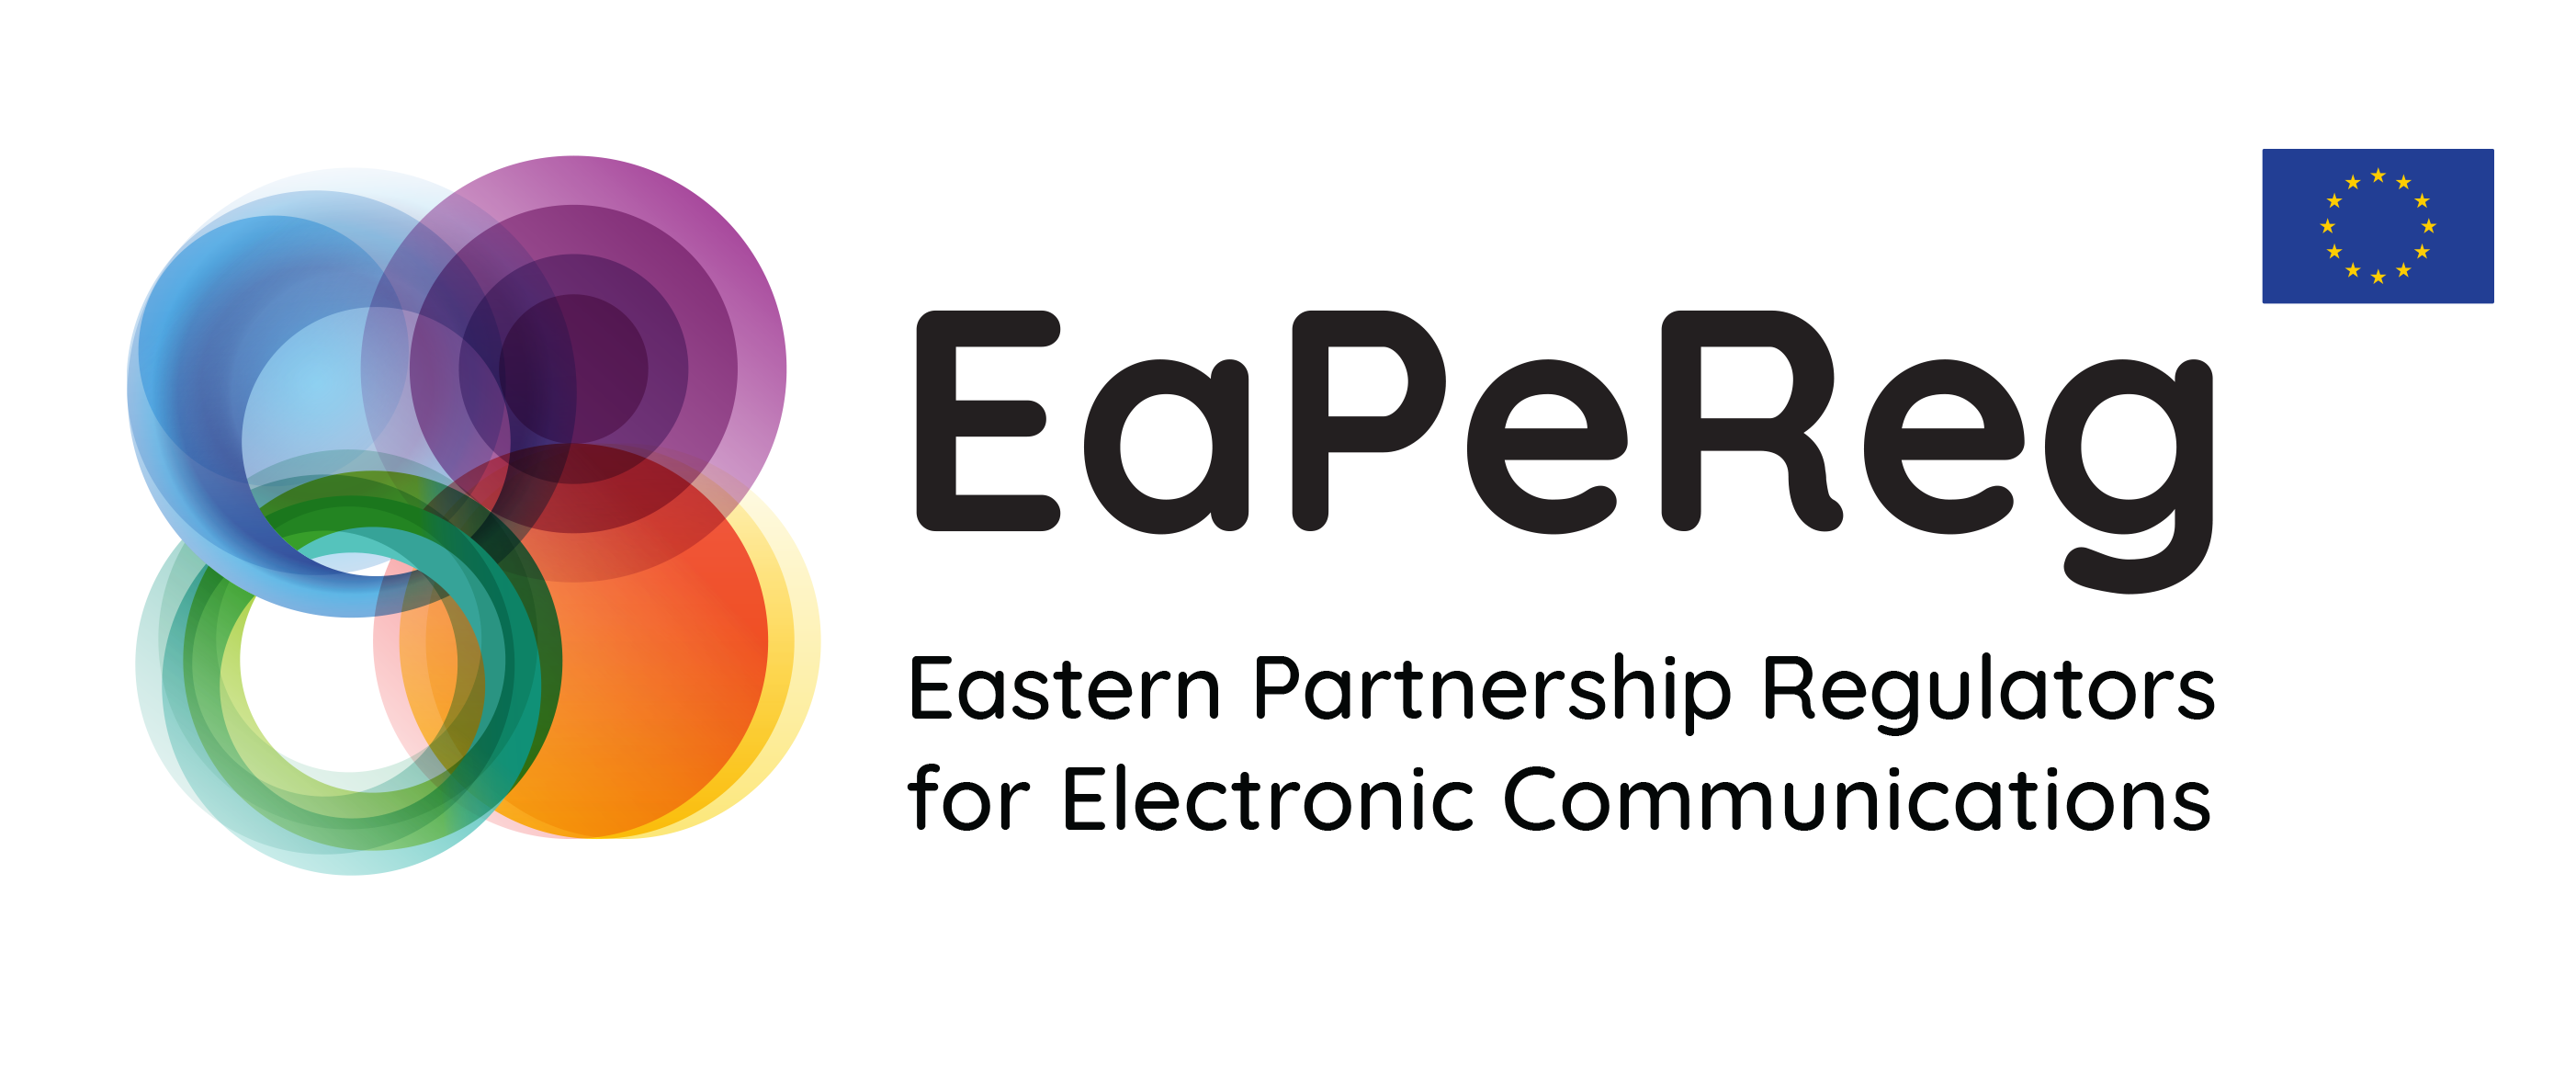 The image shows the EaPeReg logo